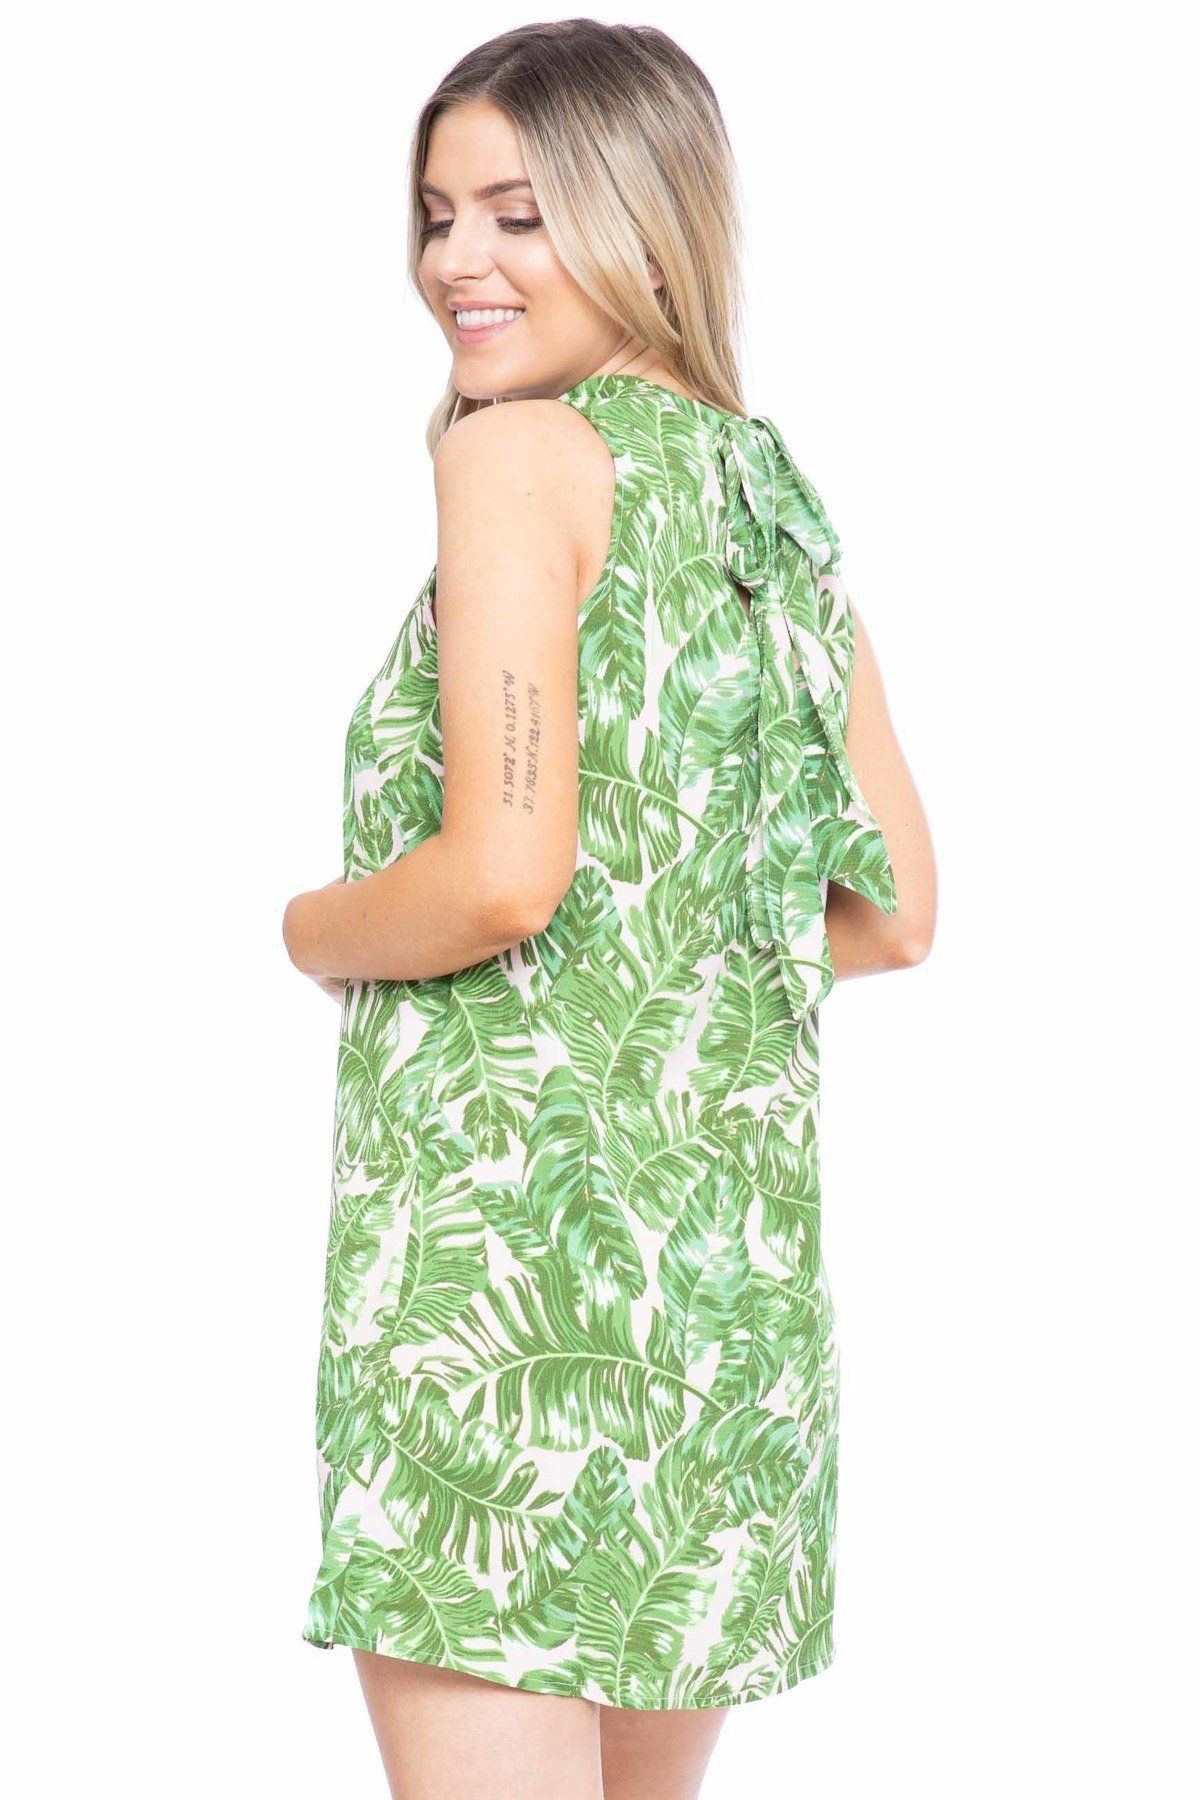 Hawaiian Leaf Print, Sleeveless, A-line Dress - RosieSensation's